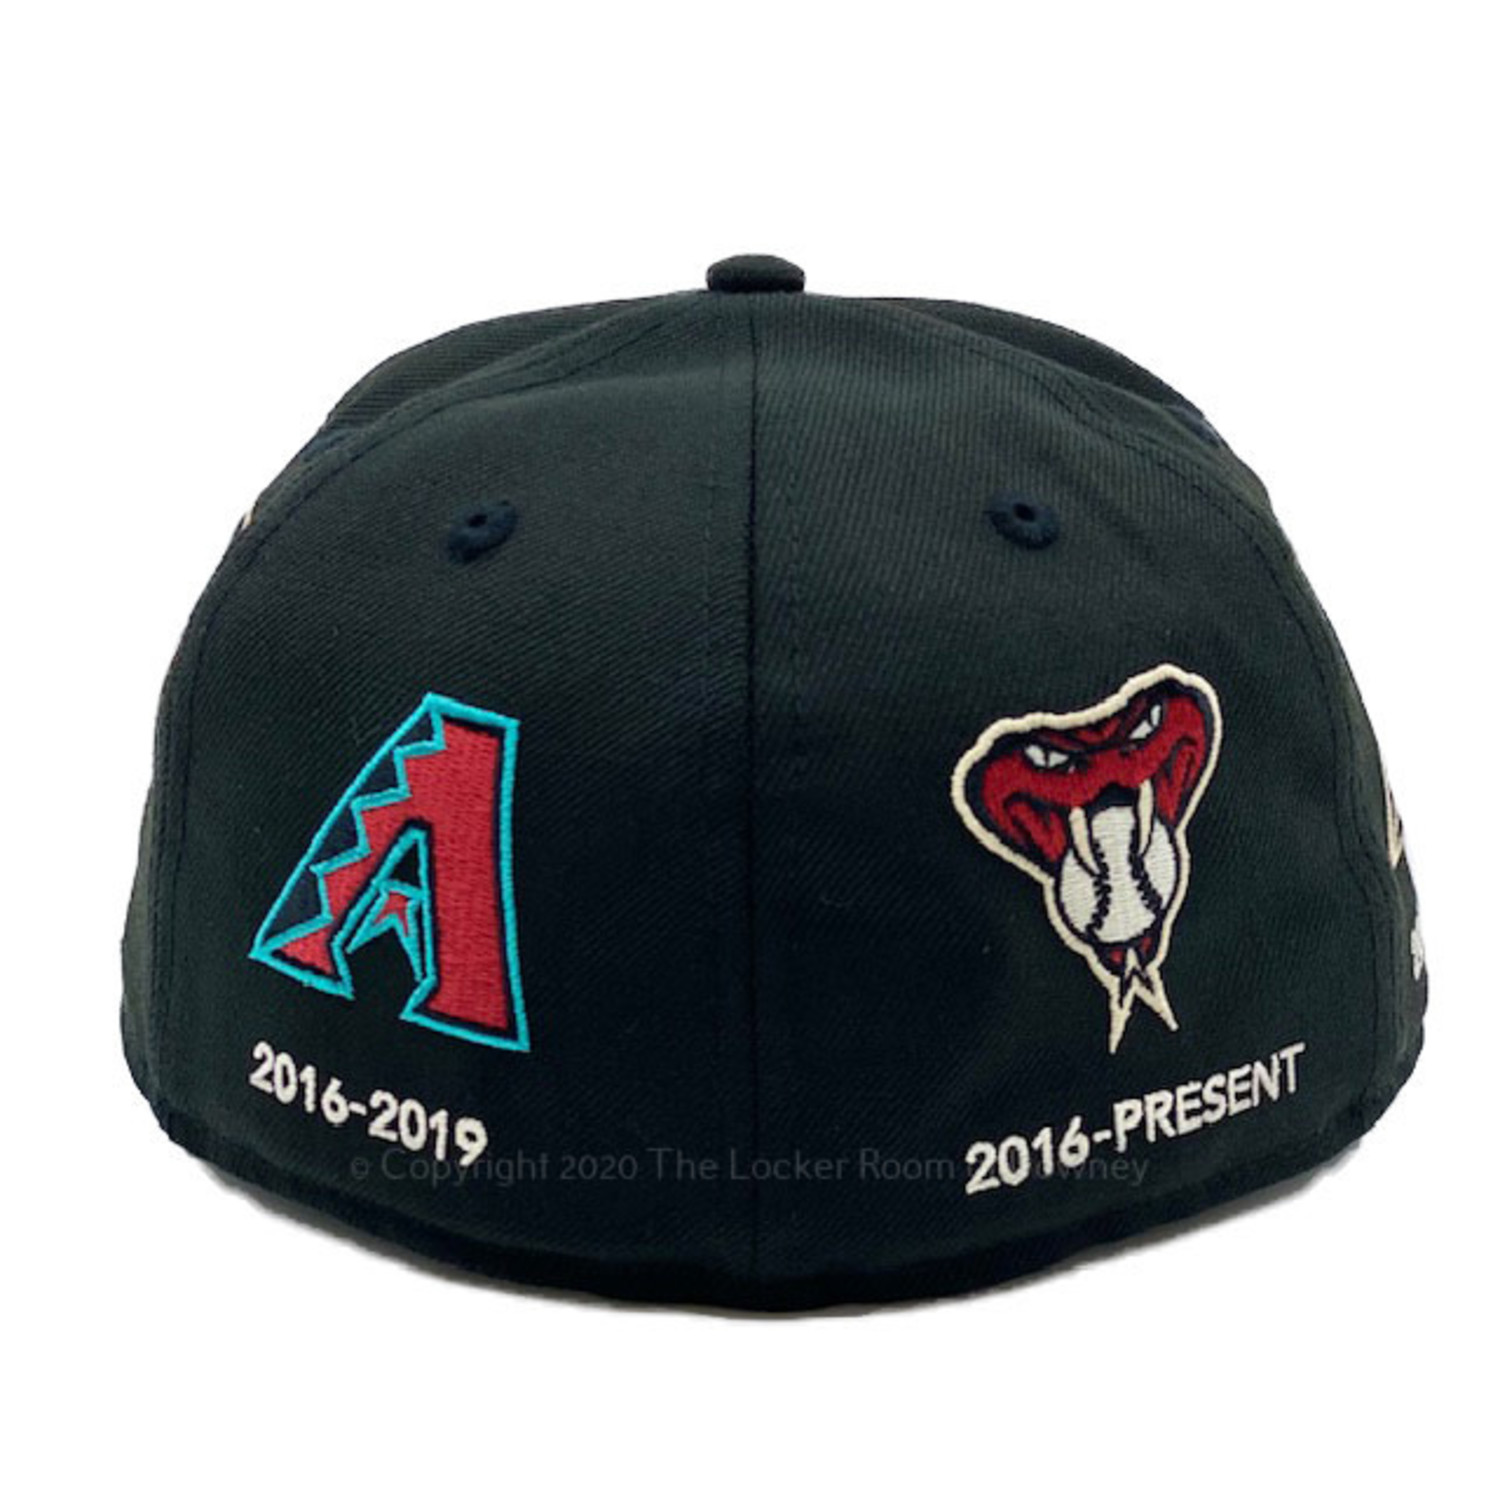 Arizona Diamondbacks Hat Logo Patch – The Emblem Source